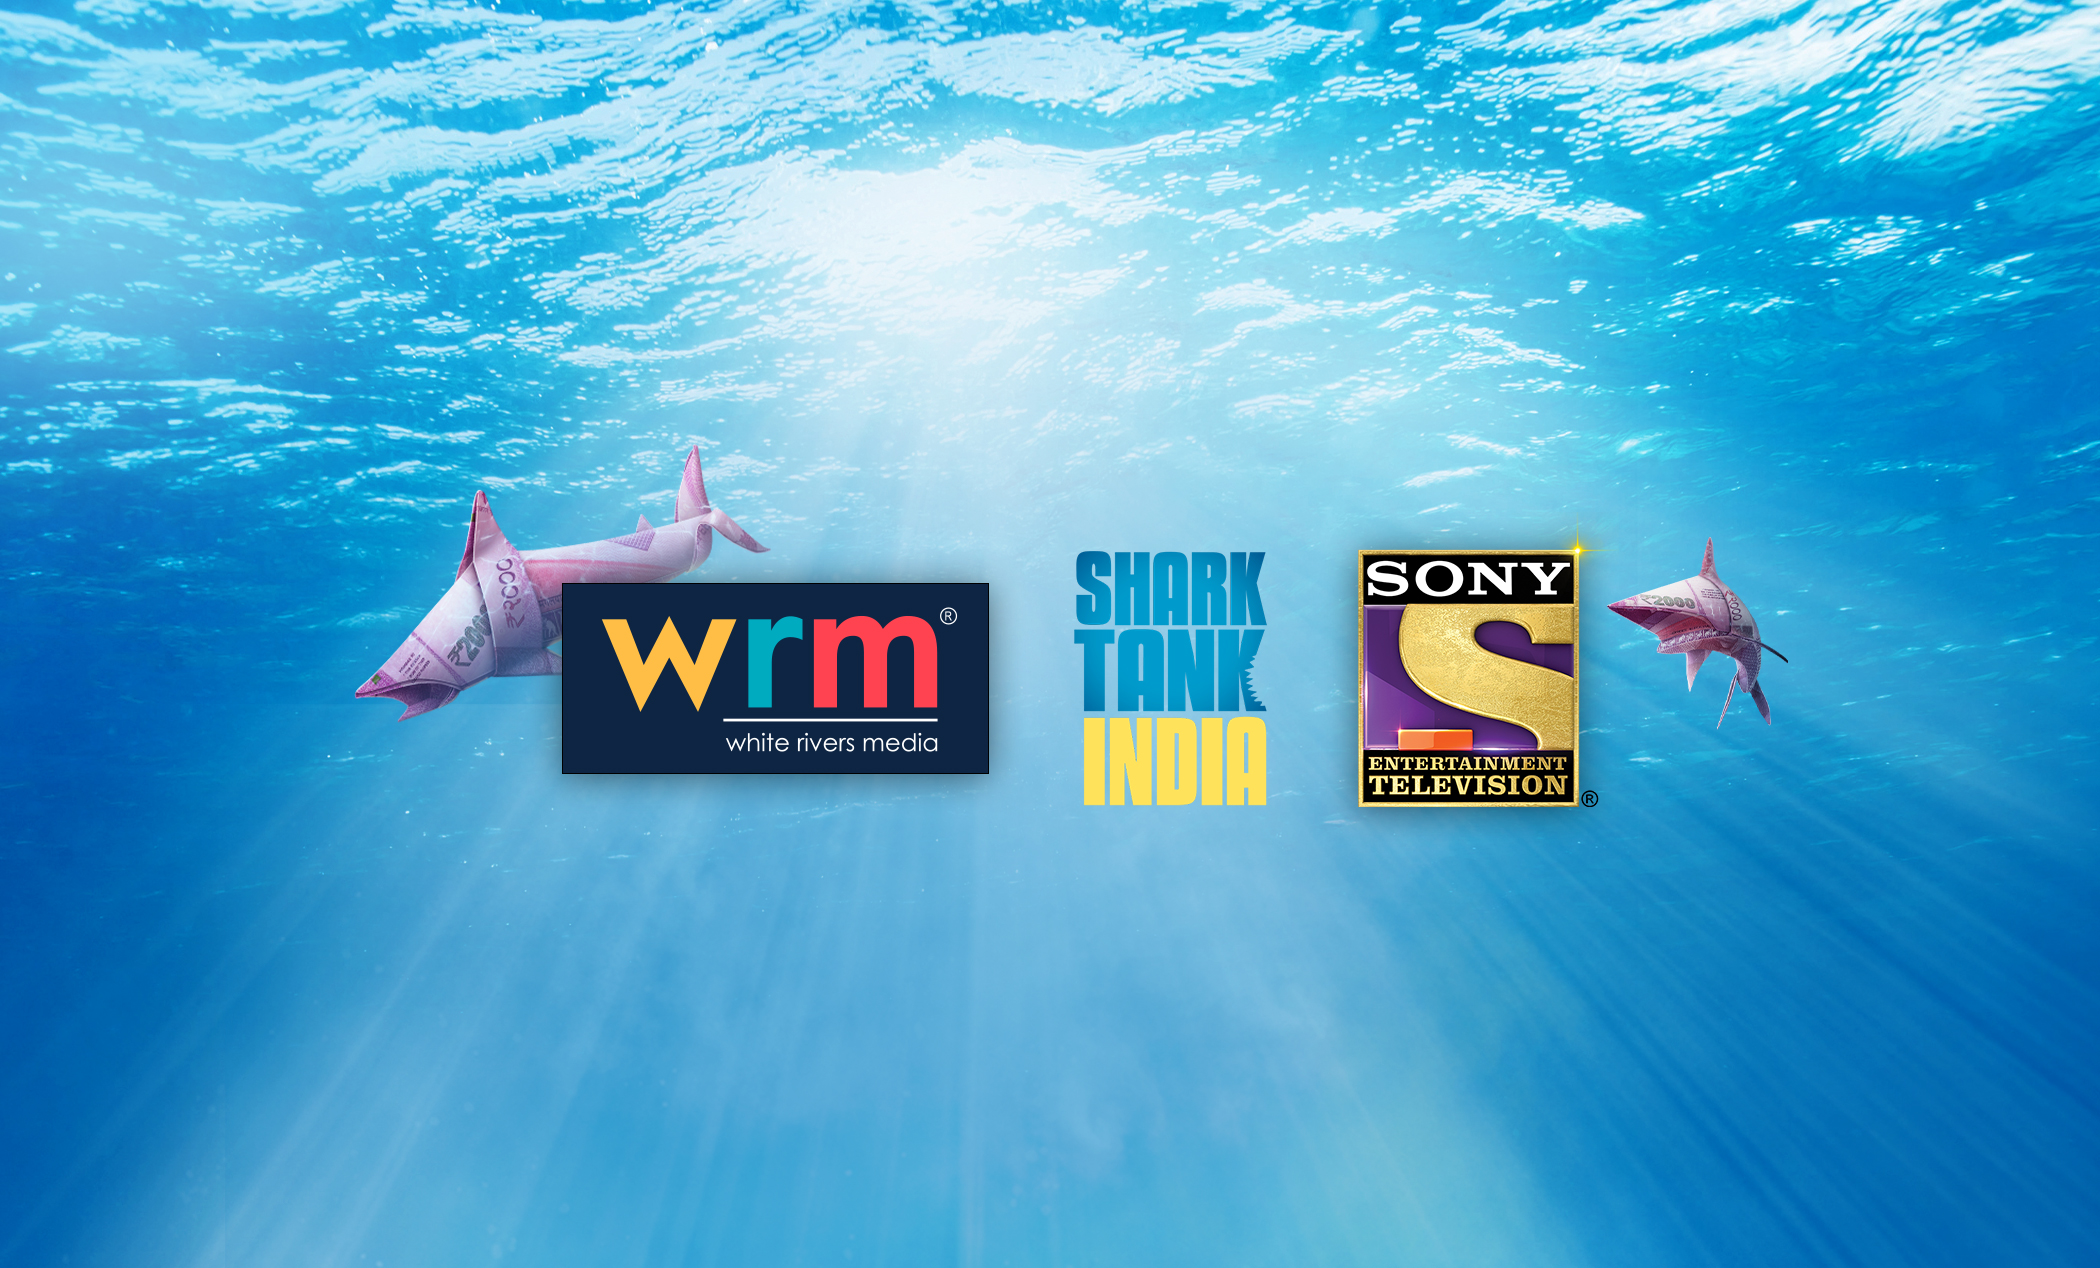 White Rivers Media X Shark Tank India X Sony Entertianment Television